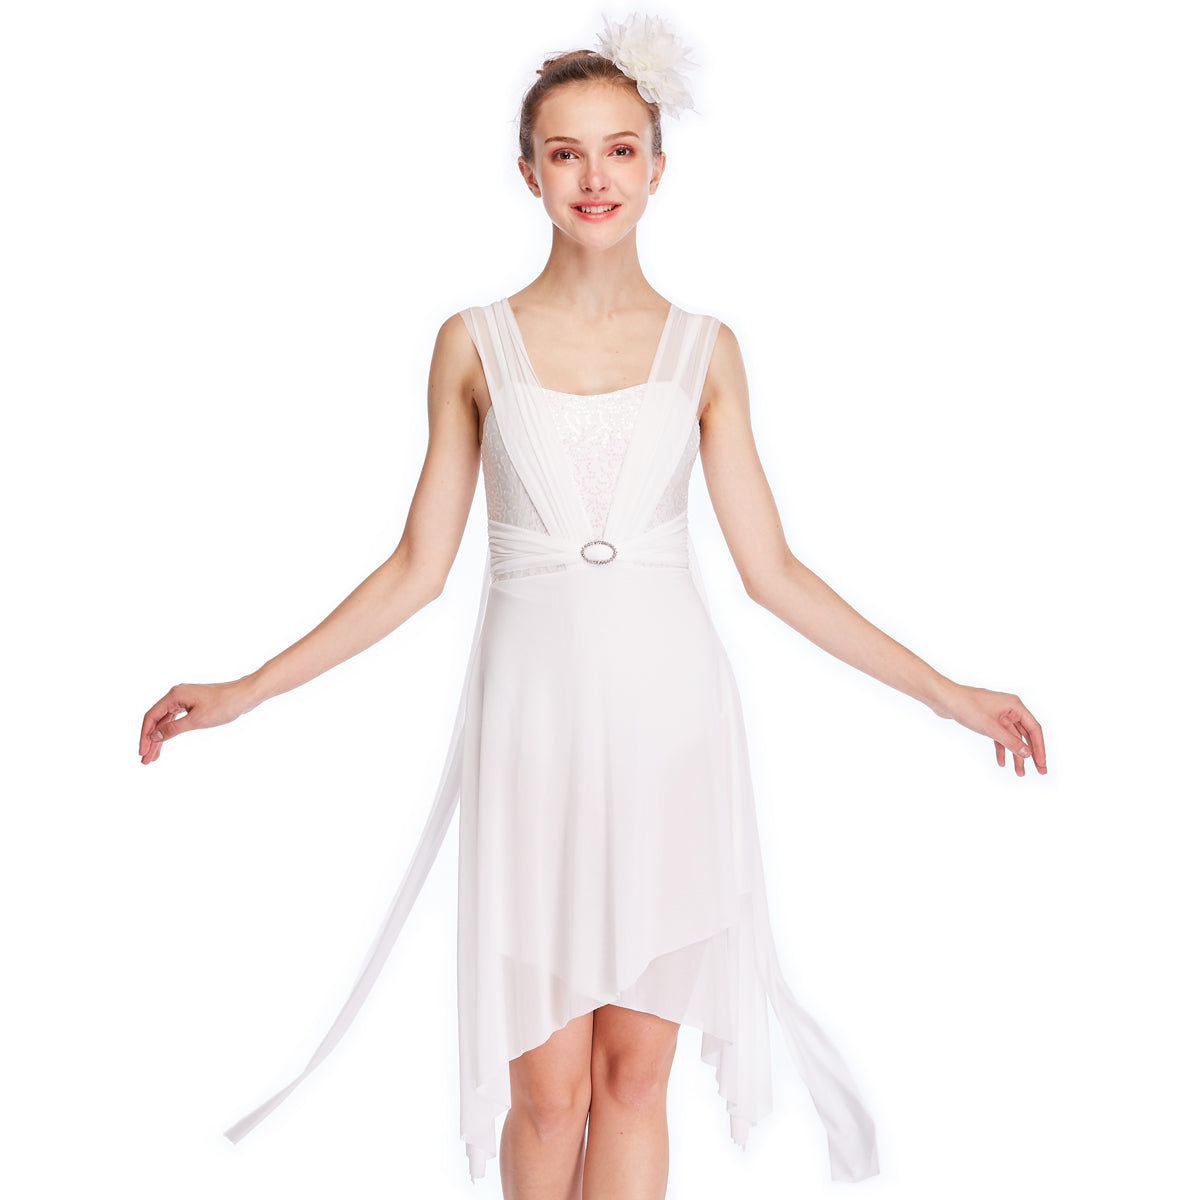 white dance dress